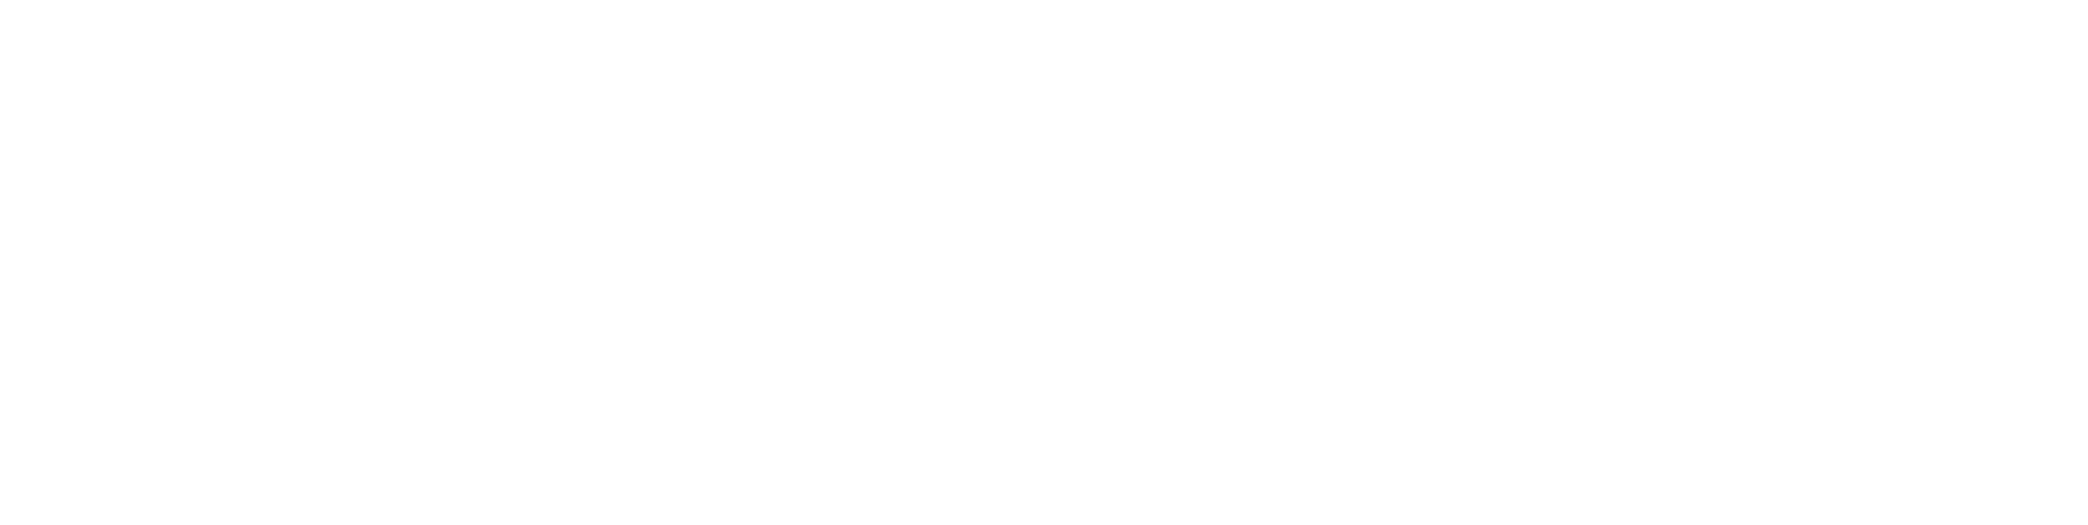 Stone Pearl Co